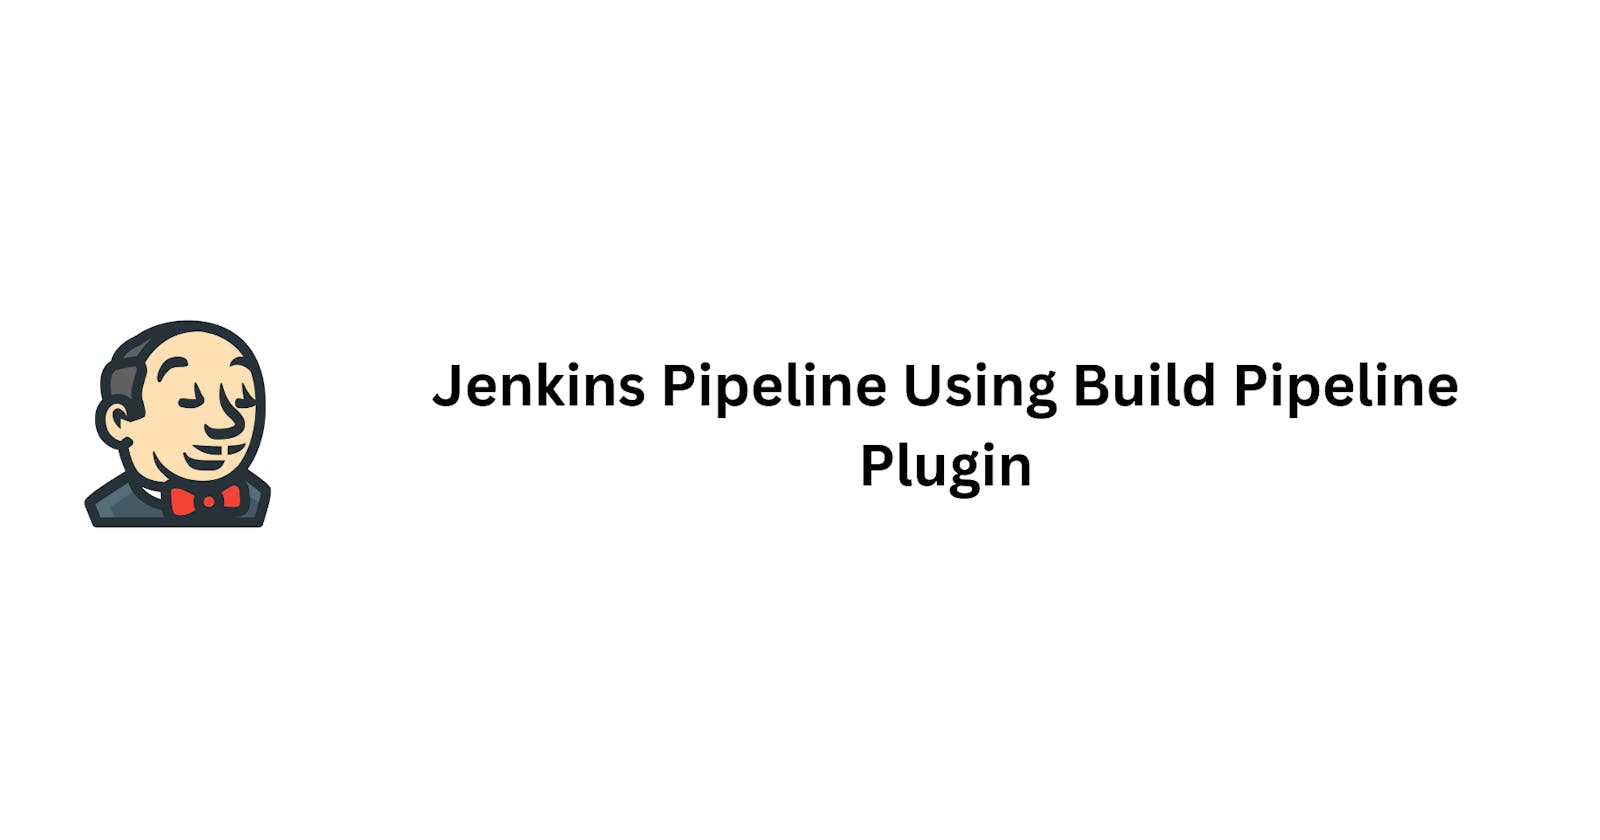 Jenkins Pipeline Using Build Pipeline Plugin: Streamlining CI/CD Workflows